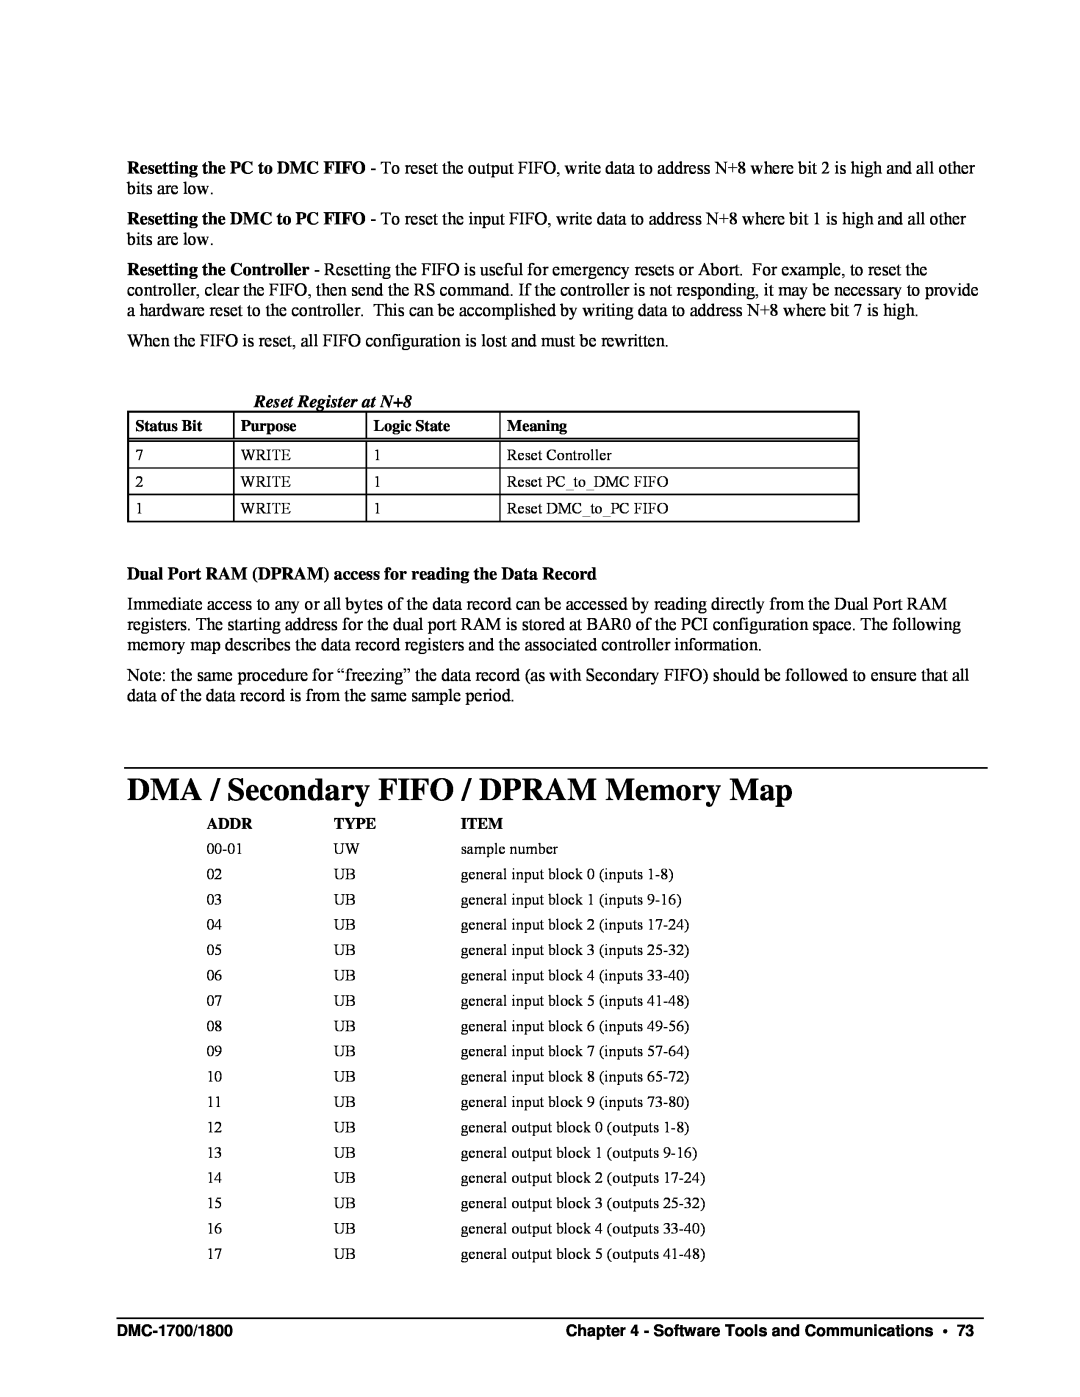 Galil DMC-1700, DMC-1800 user manual DMA / Secondary FIFO / DPRAM Memory Map, Reset Register at N+8 